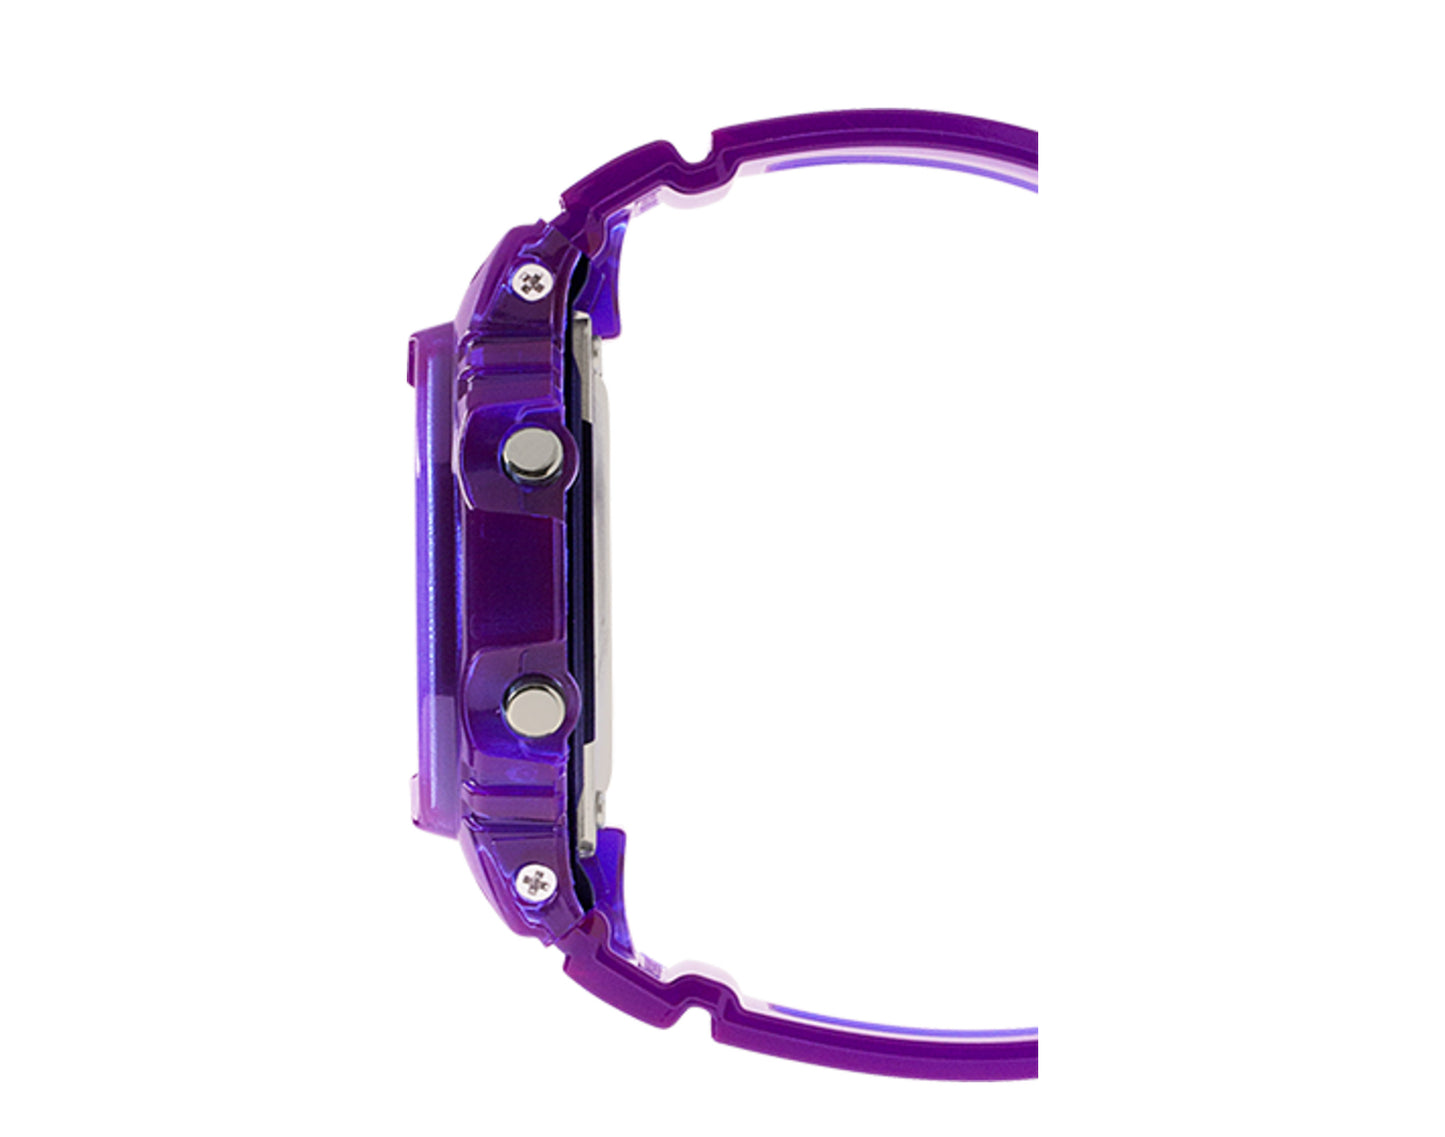 Casio G-Shock Baby-G BGD560 Digital Resin Purple Skeleton Watch BGD560S-6